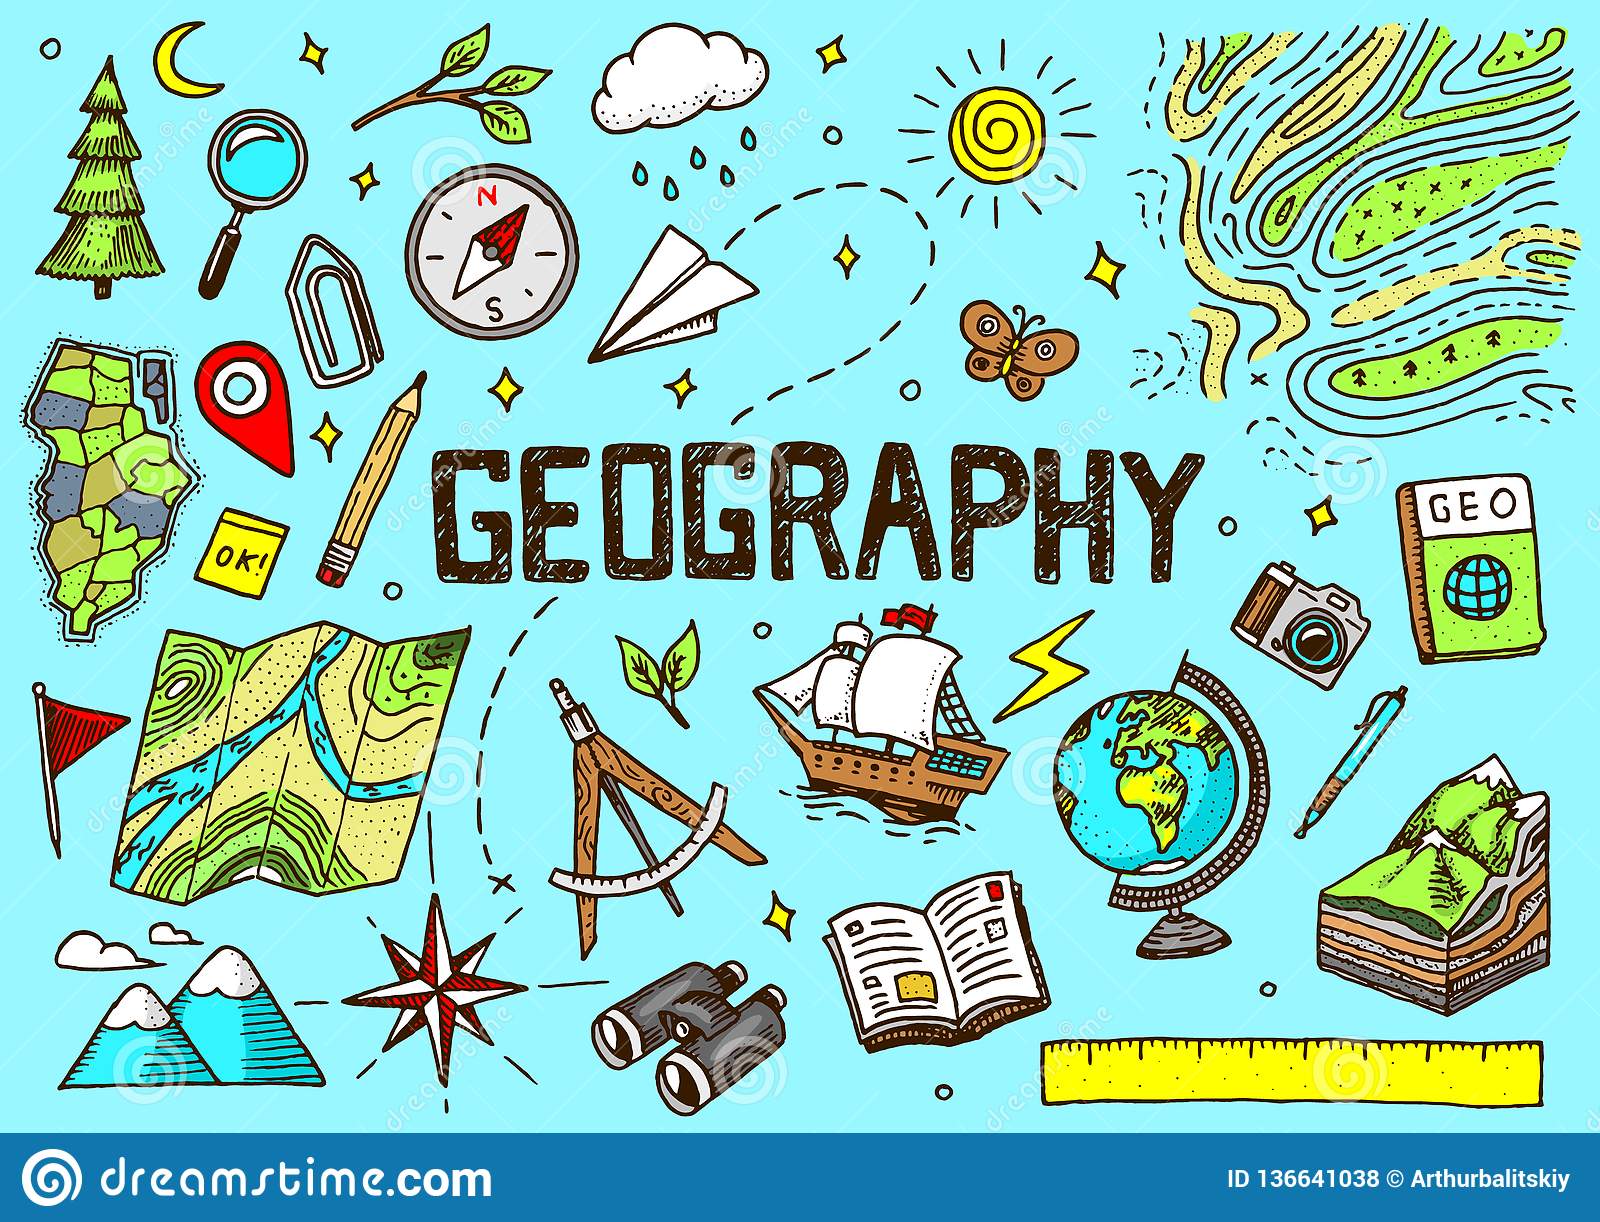 Basic Geography Trivia